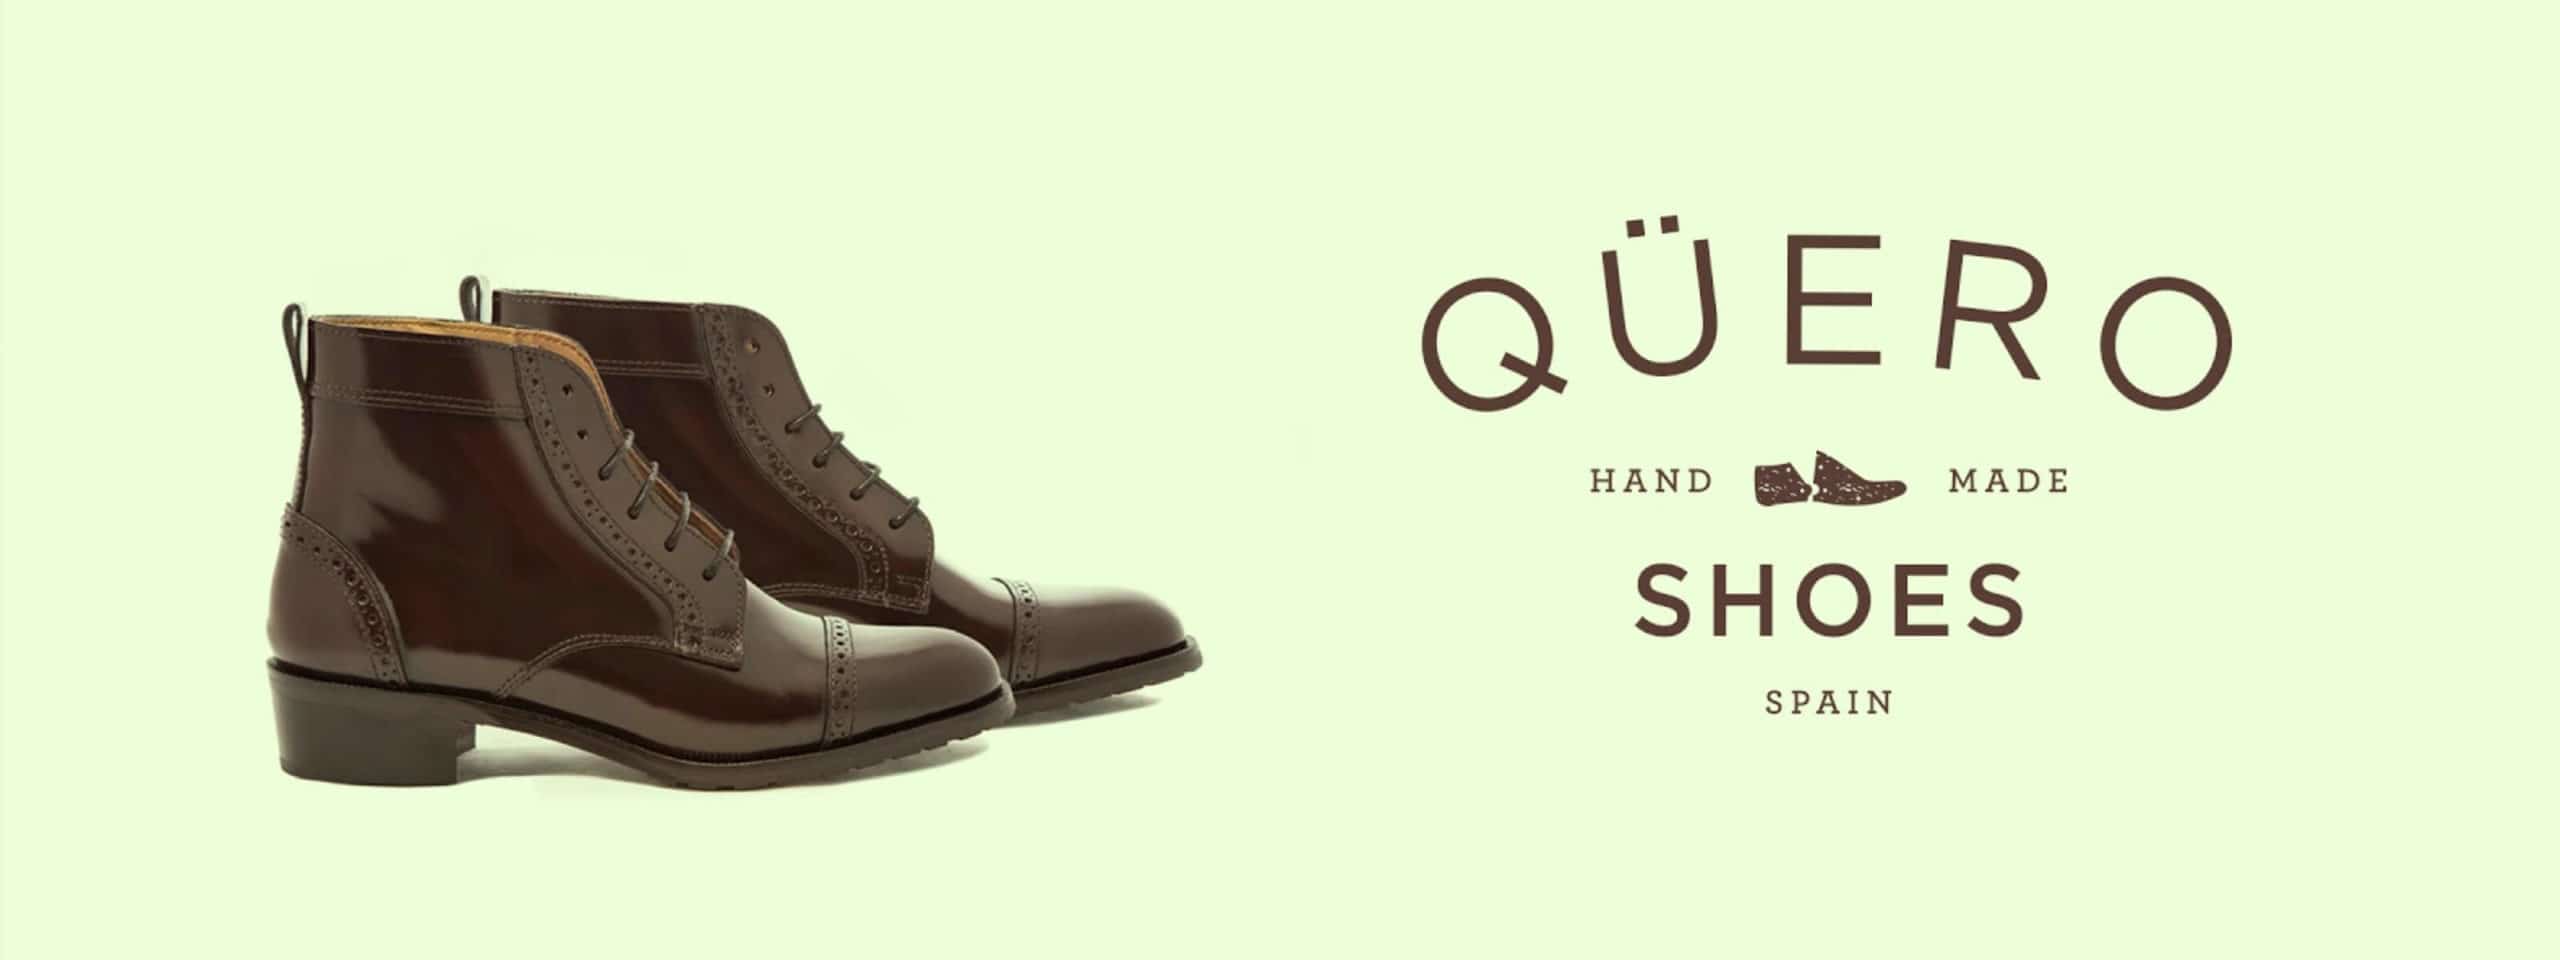 Quero Shoes Logo and Shoes